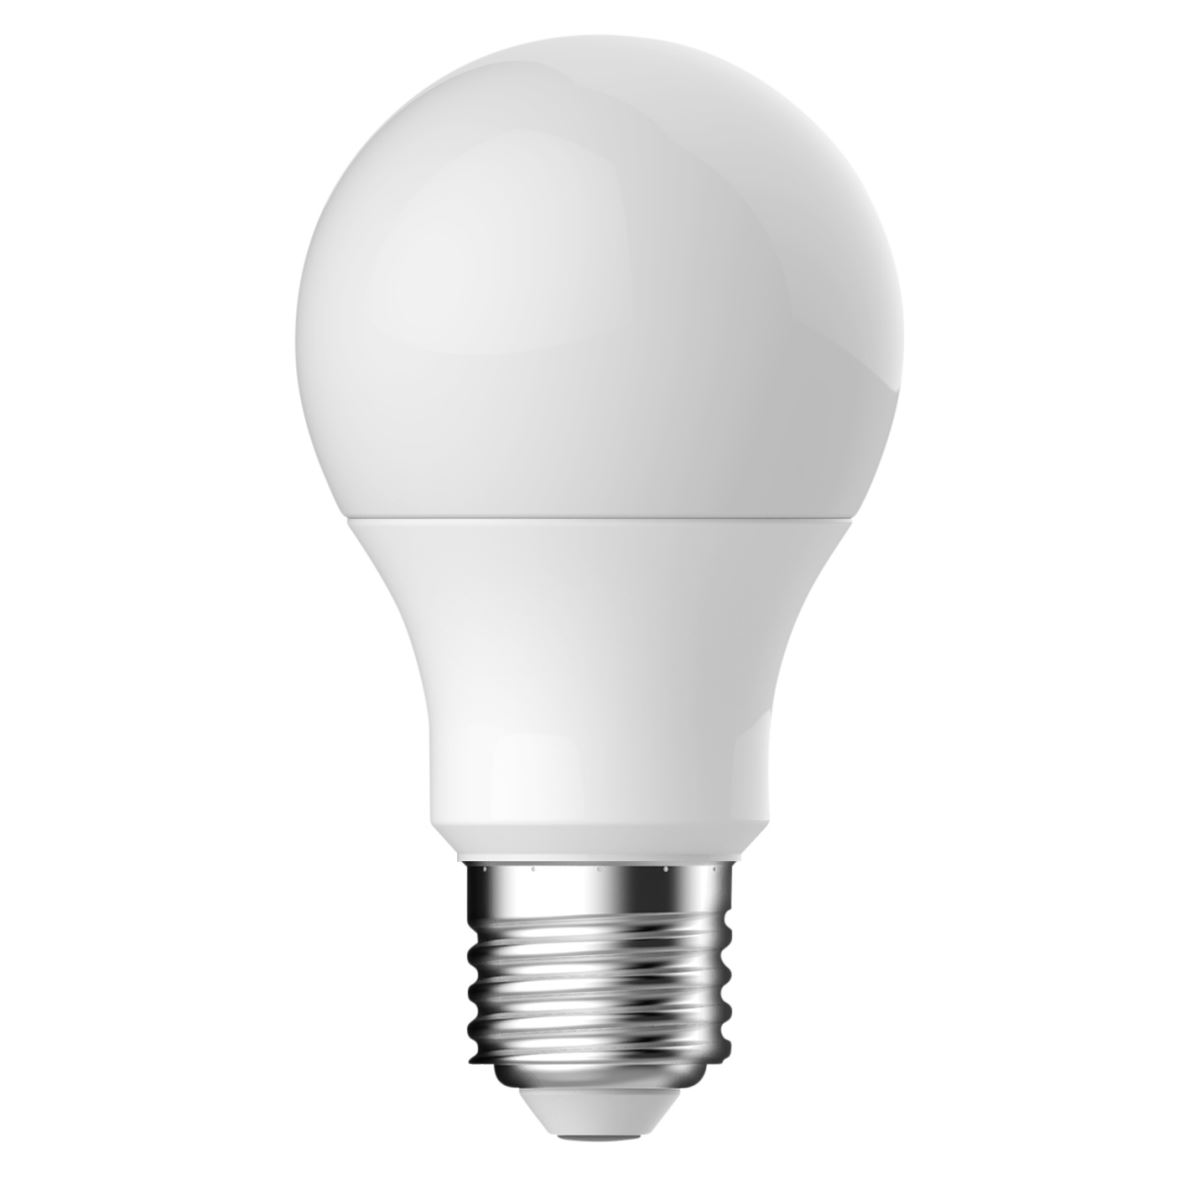 Nordlux Energetic LED Leuchtmittel E27 A60 weiß 806lm 2700K 9,4W 80Ra 240° 6x6x10,9cm von Energetic